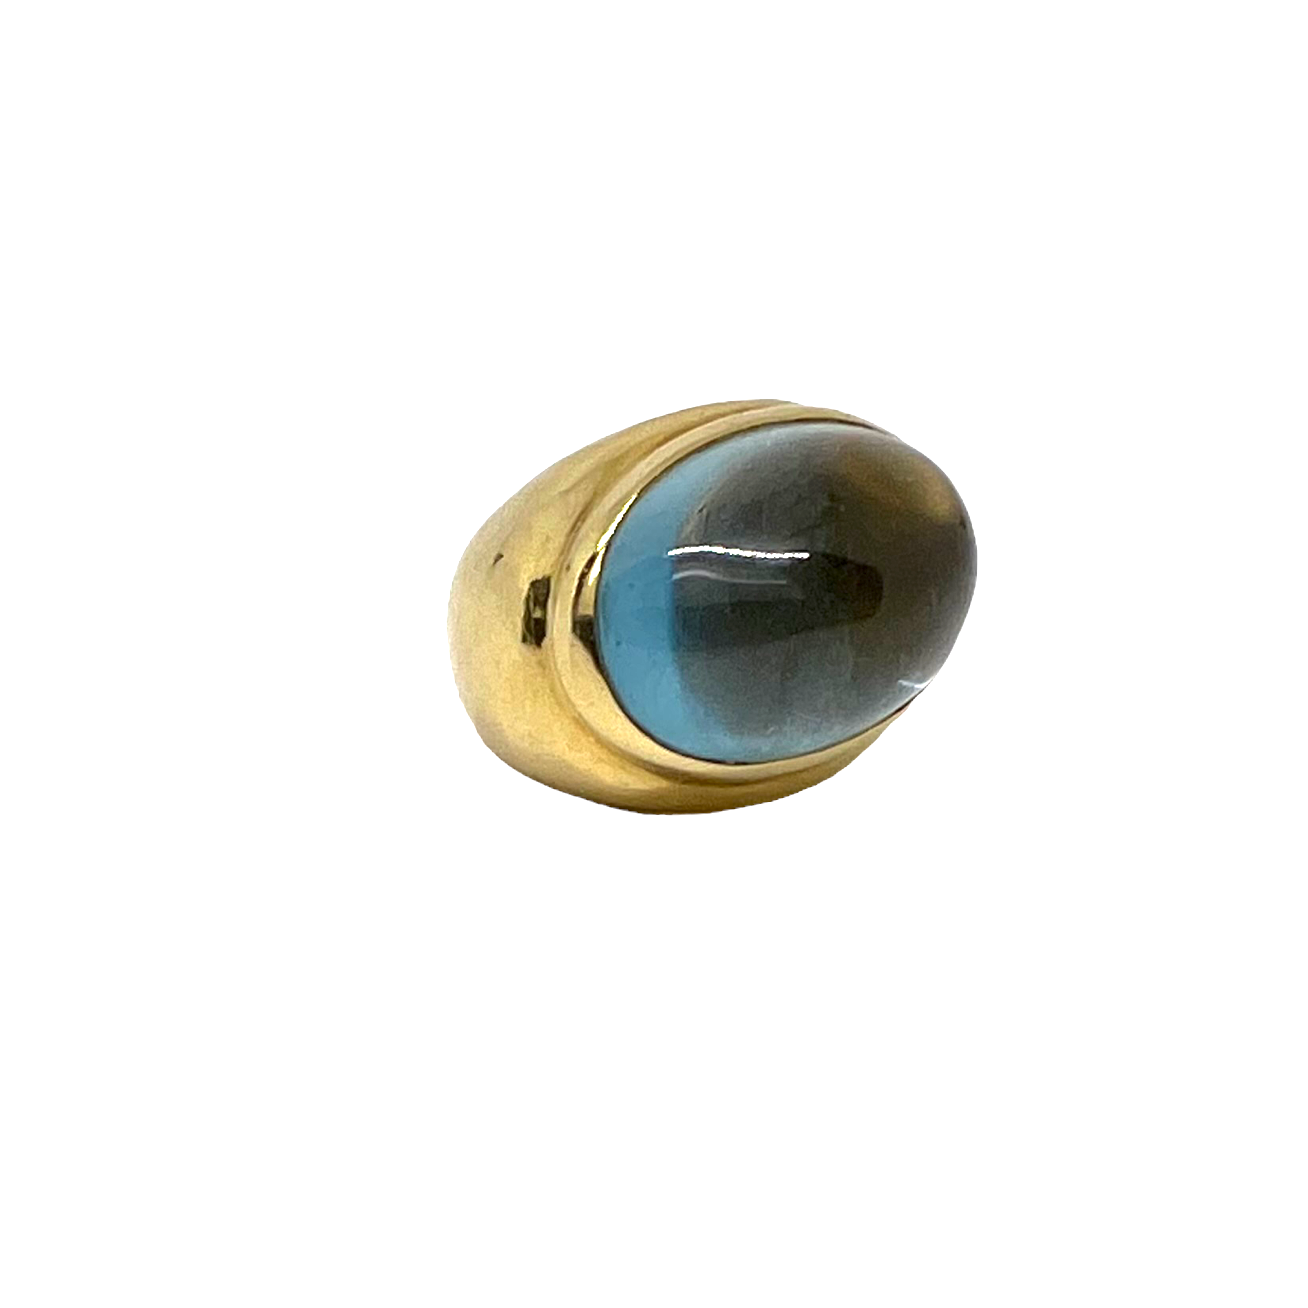 Faraone Mennella Gold Blue Topaz Cocktail Ring